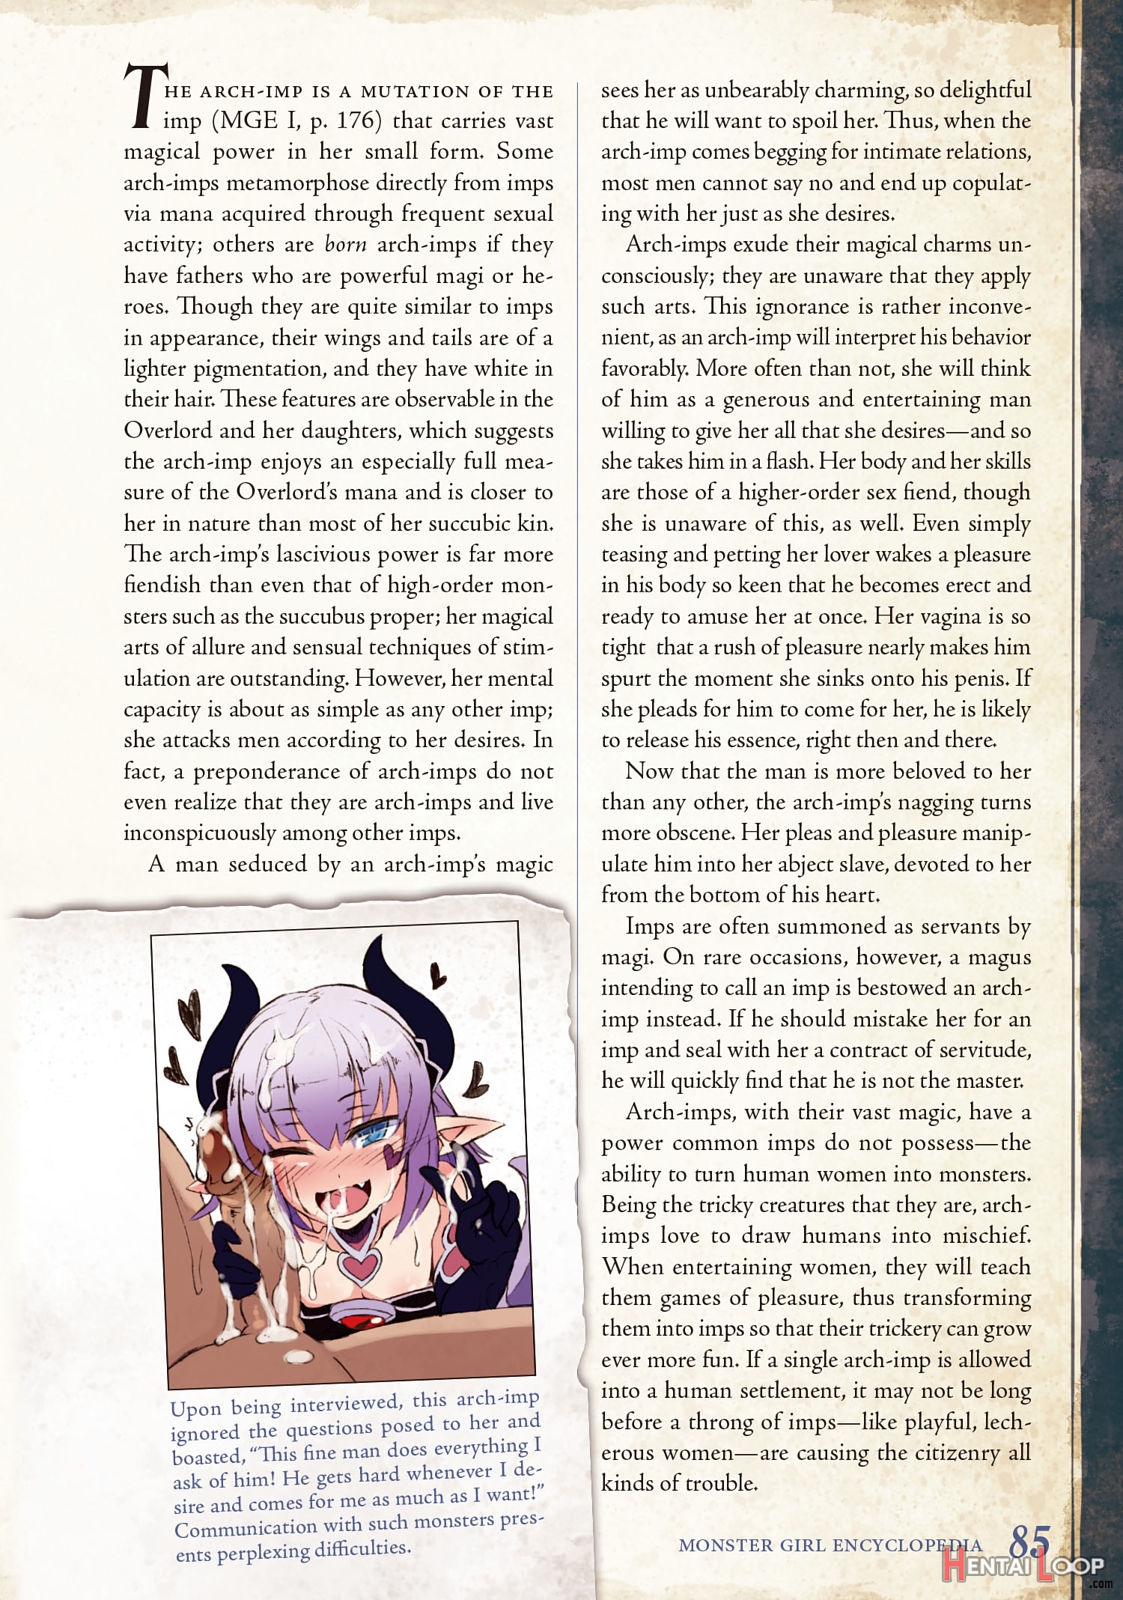 Monster Girl Encyclopedia Vol. 2 page 86